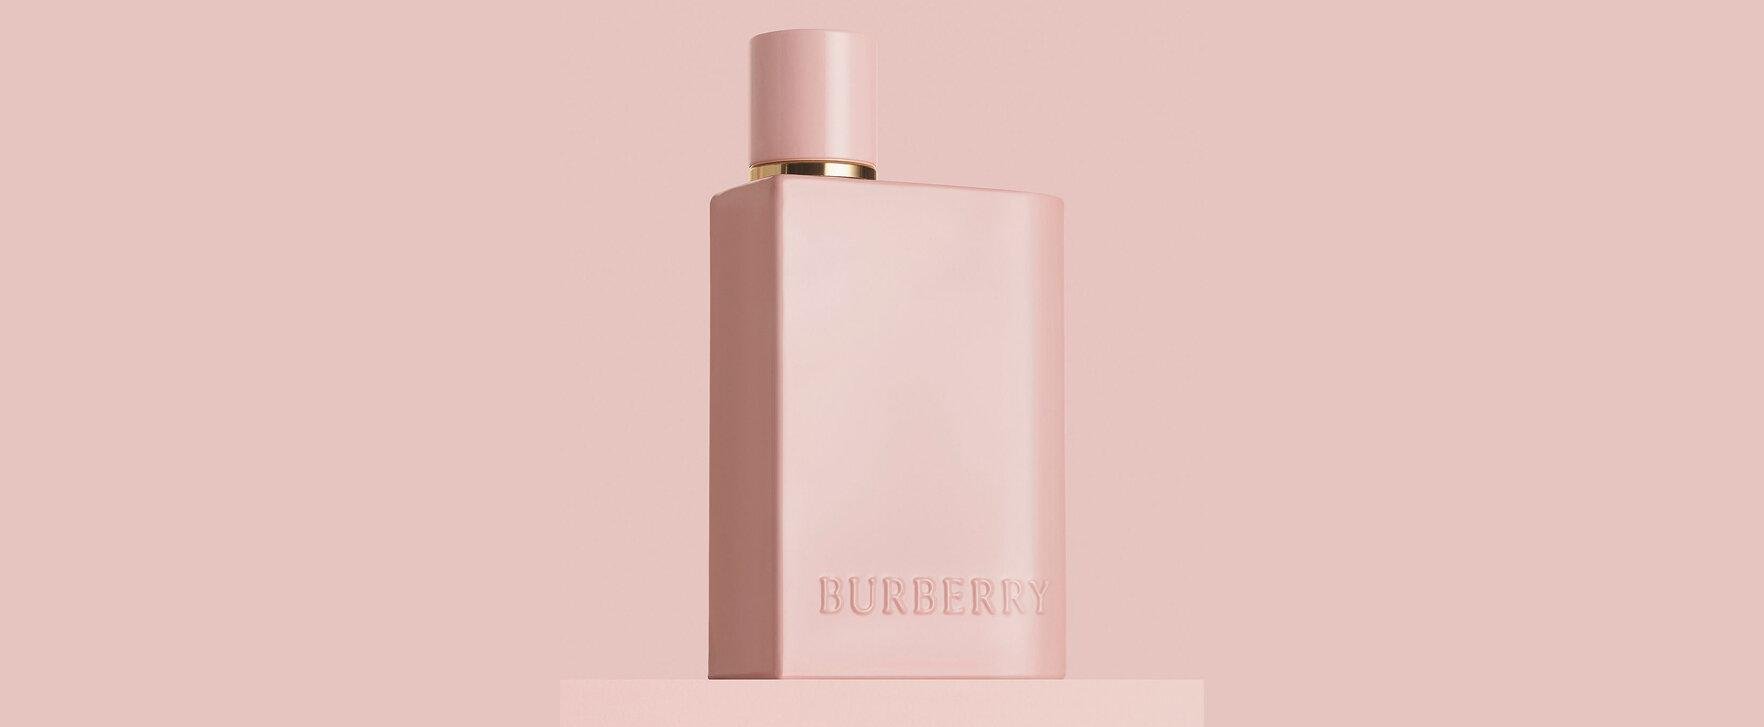 “Her Elixir De Parfum” – Burberry Launches New Version of the Fragrance